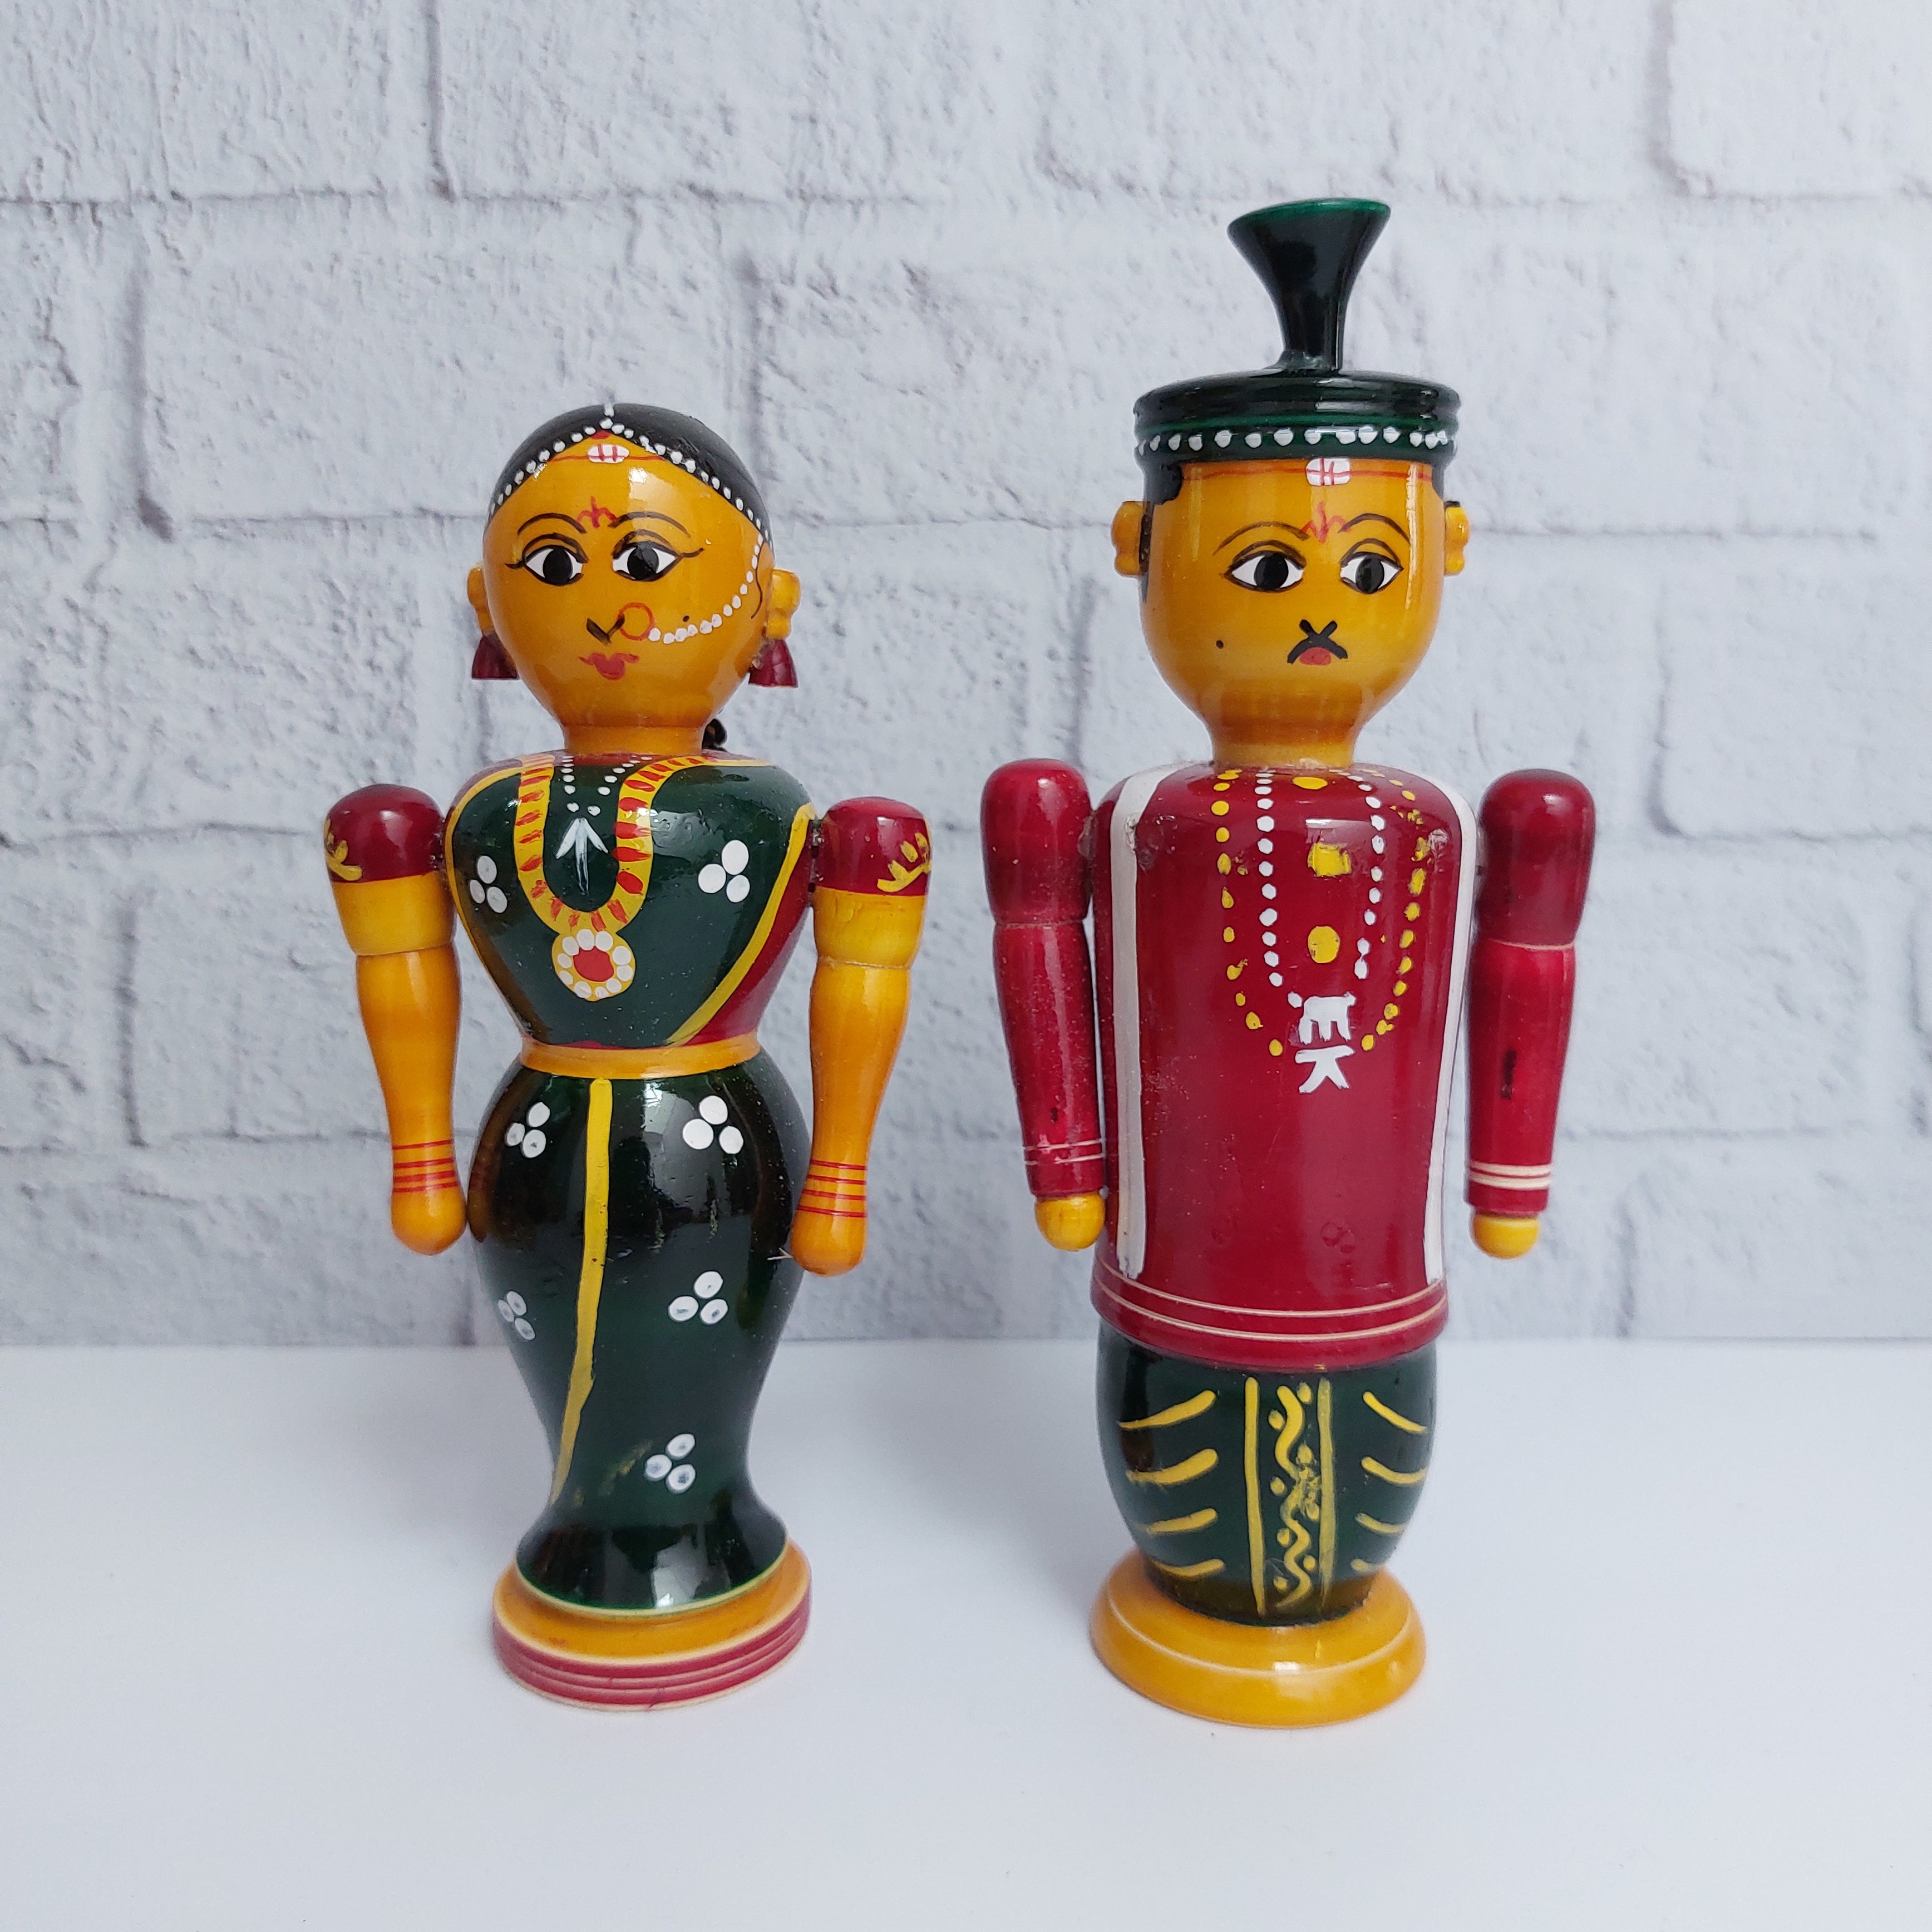 Etikoppaka Marriage Pair Medium-Zishta Traditional Home Decor Toys